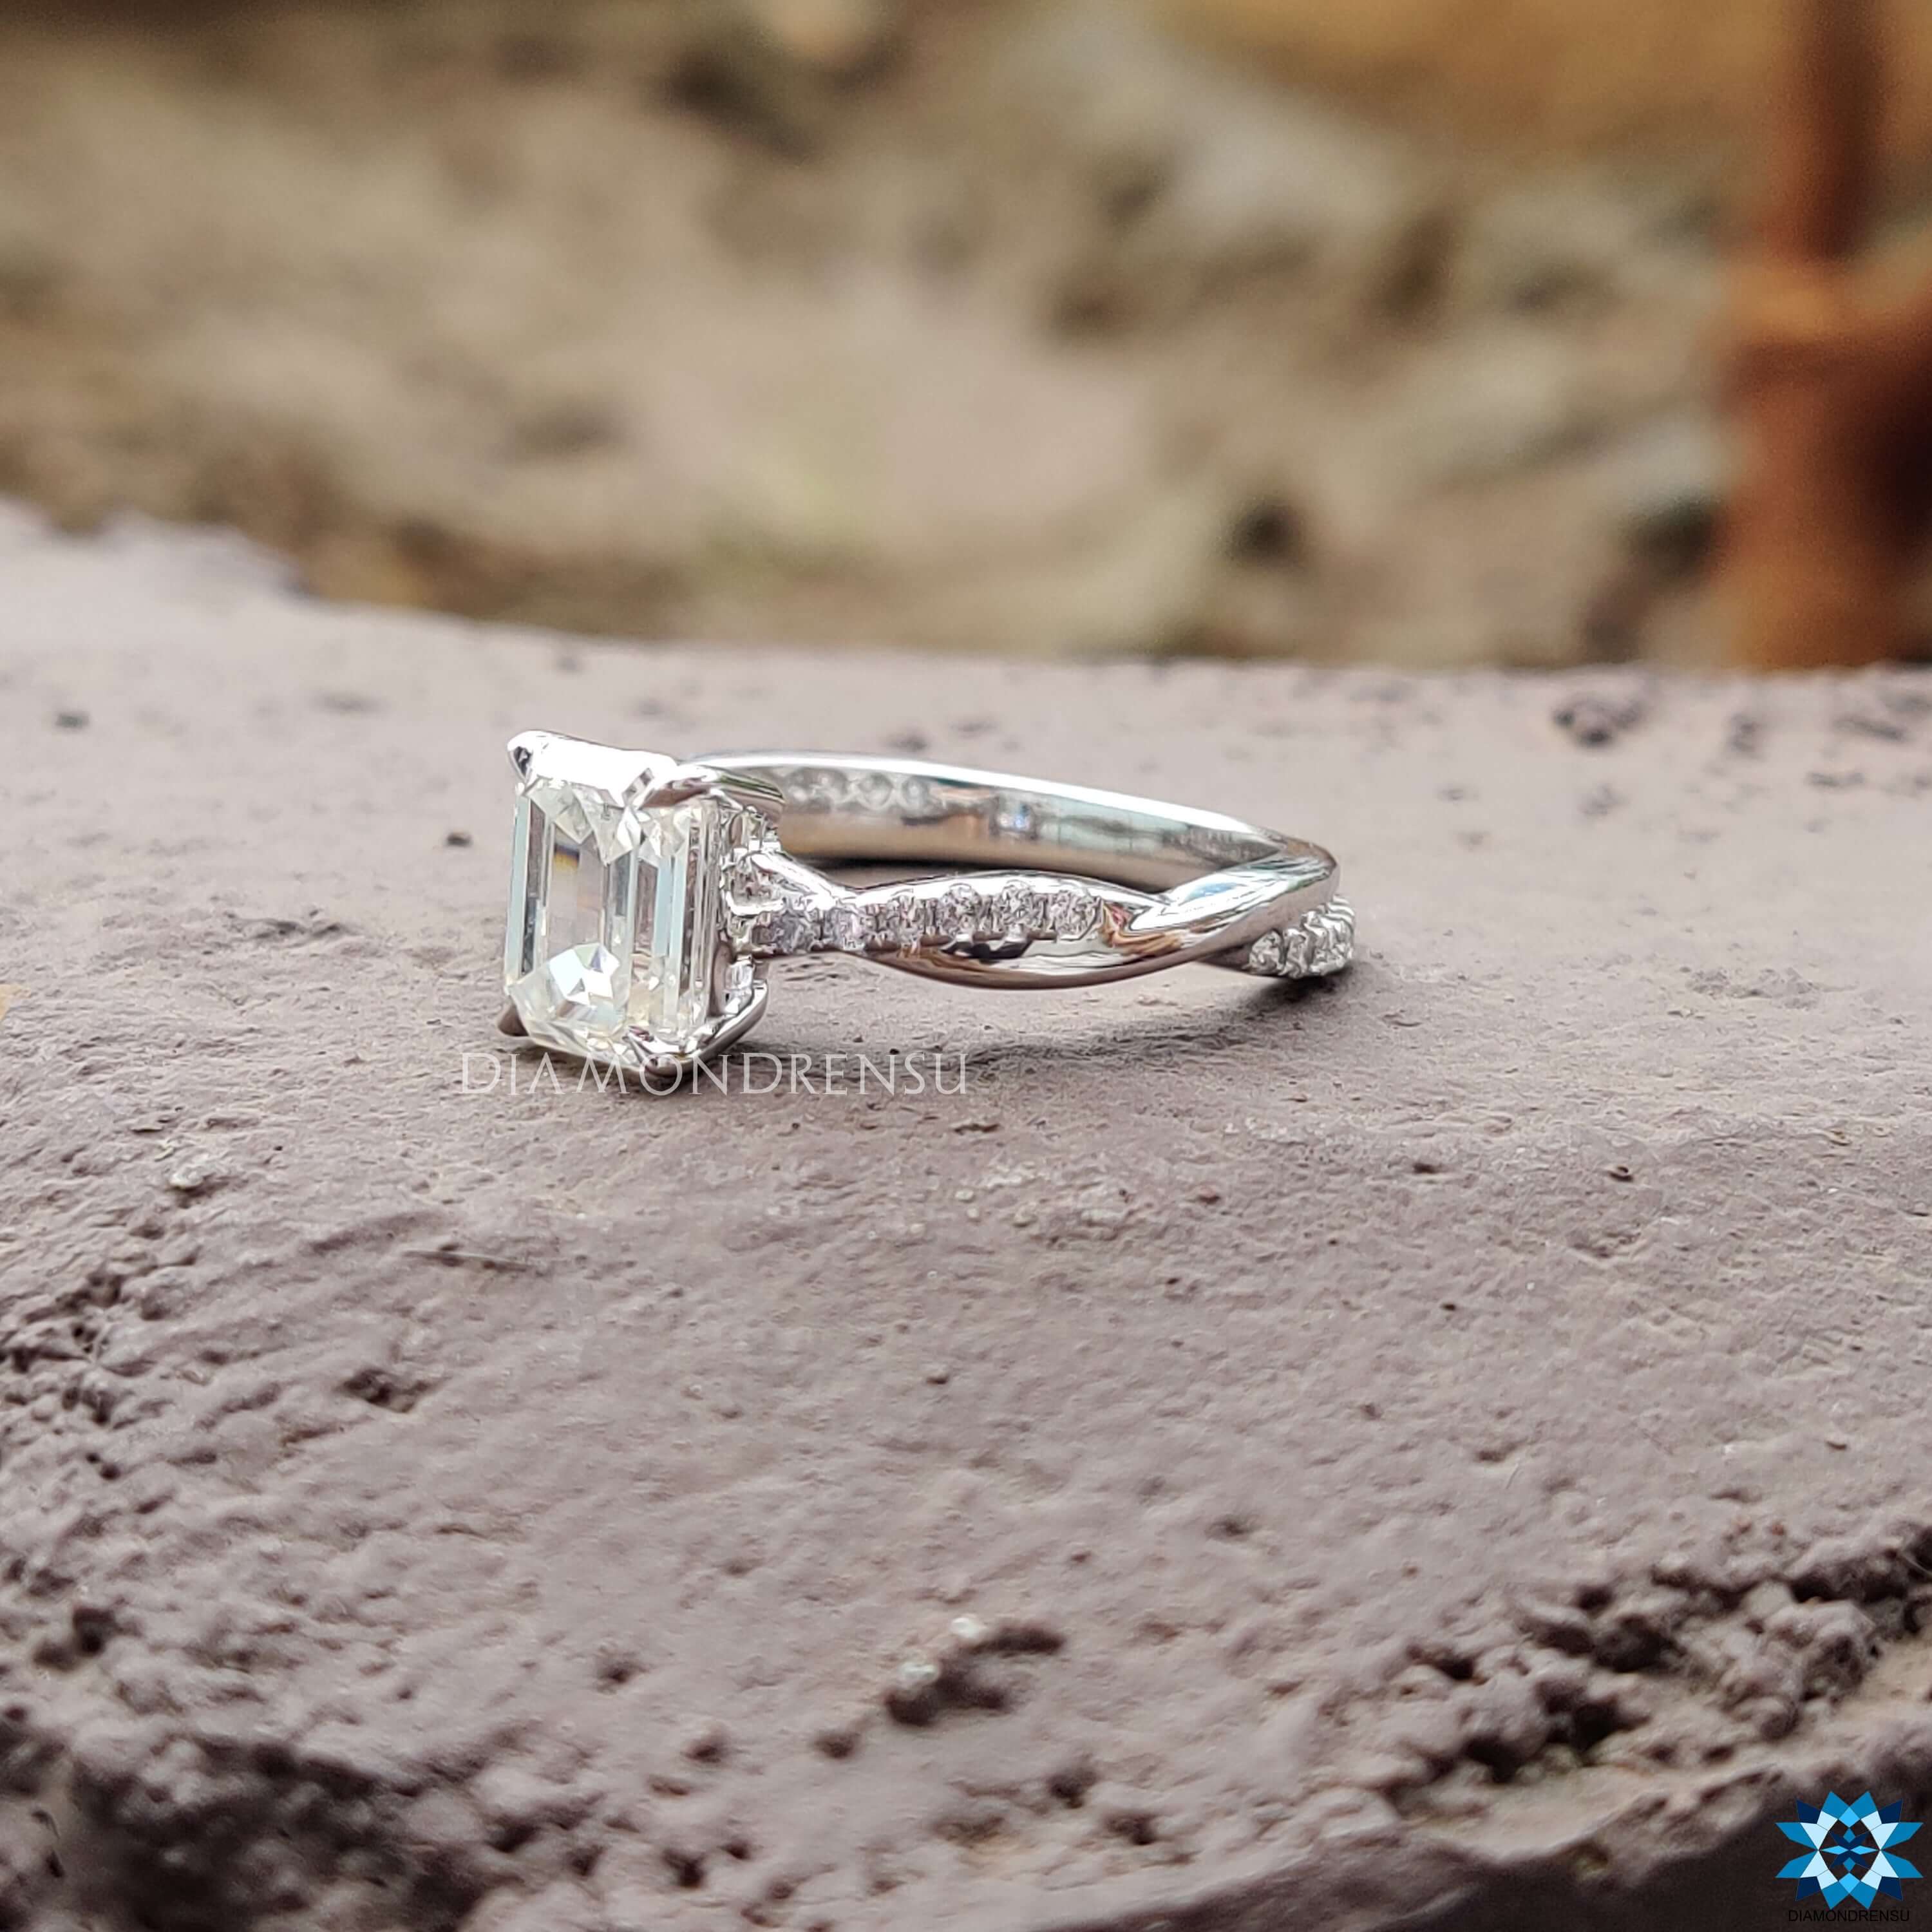 create your own moissanite engagement ring - diamondrensu